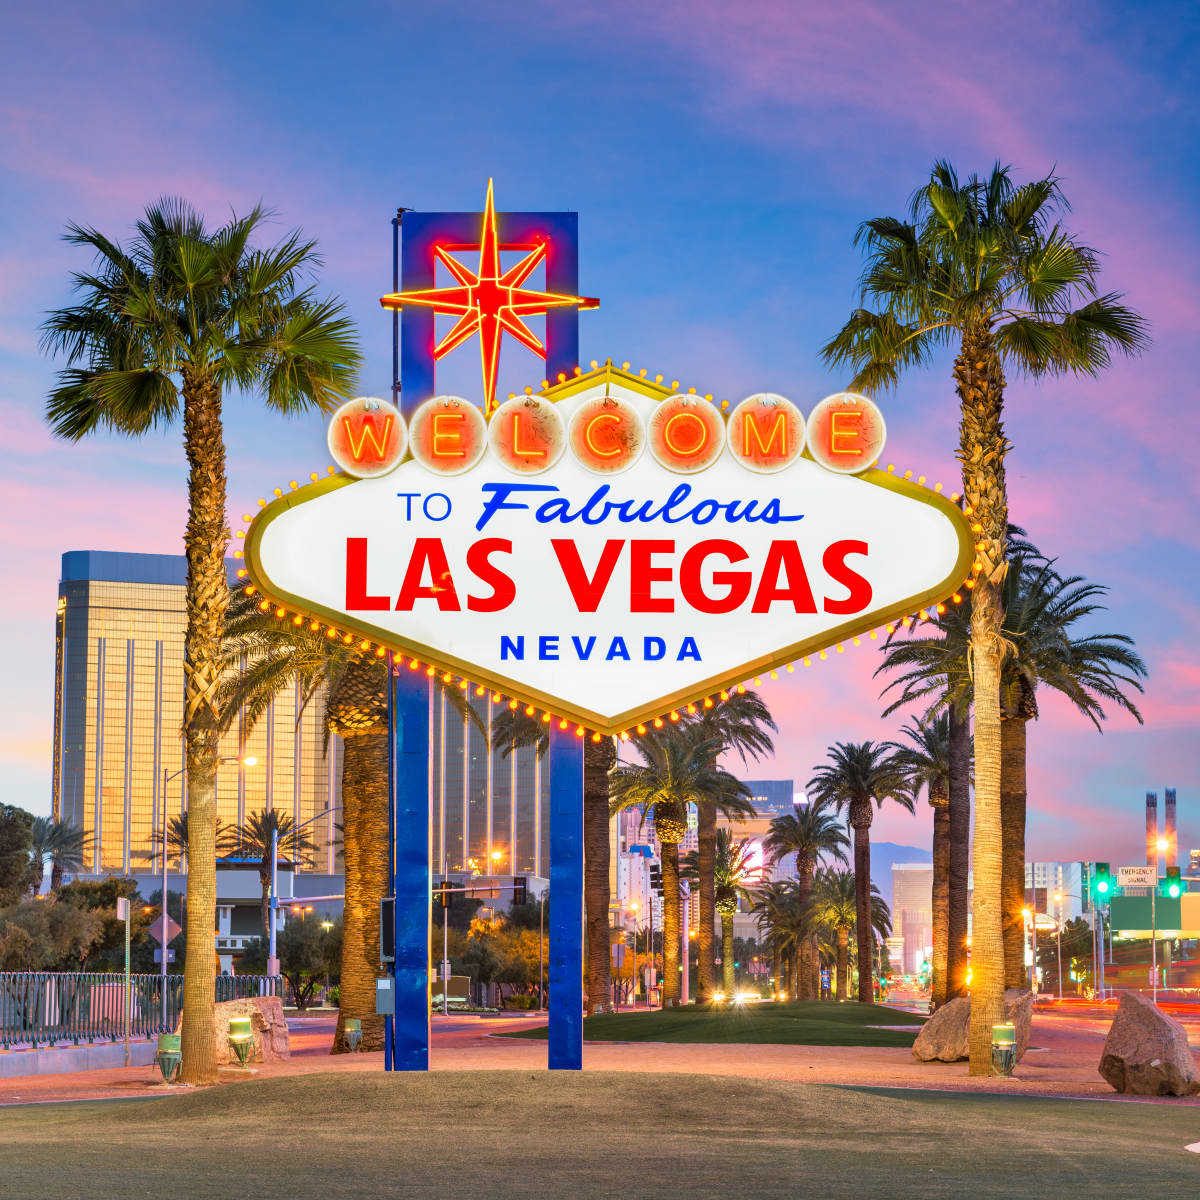 Riviera Hotel and Casino - Las Vegas, NV (Legacy) - Satellite Imagery  Oddities on